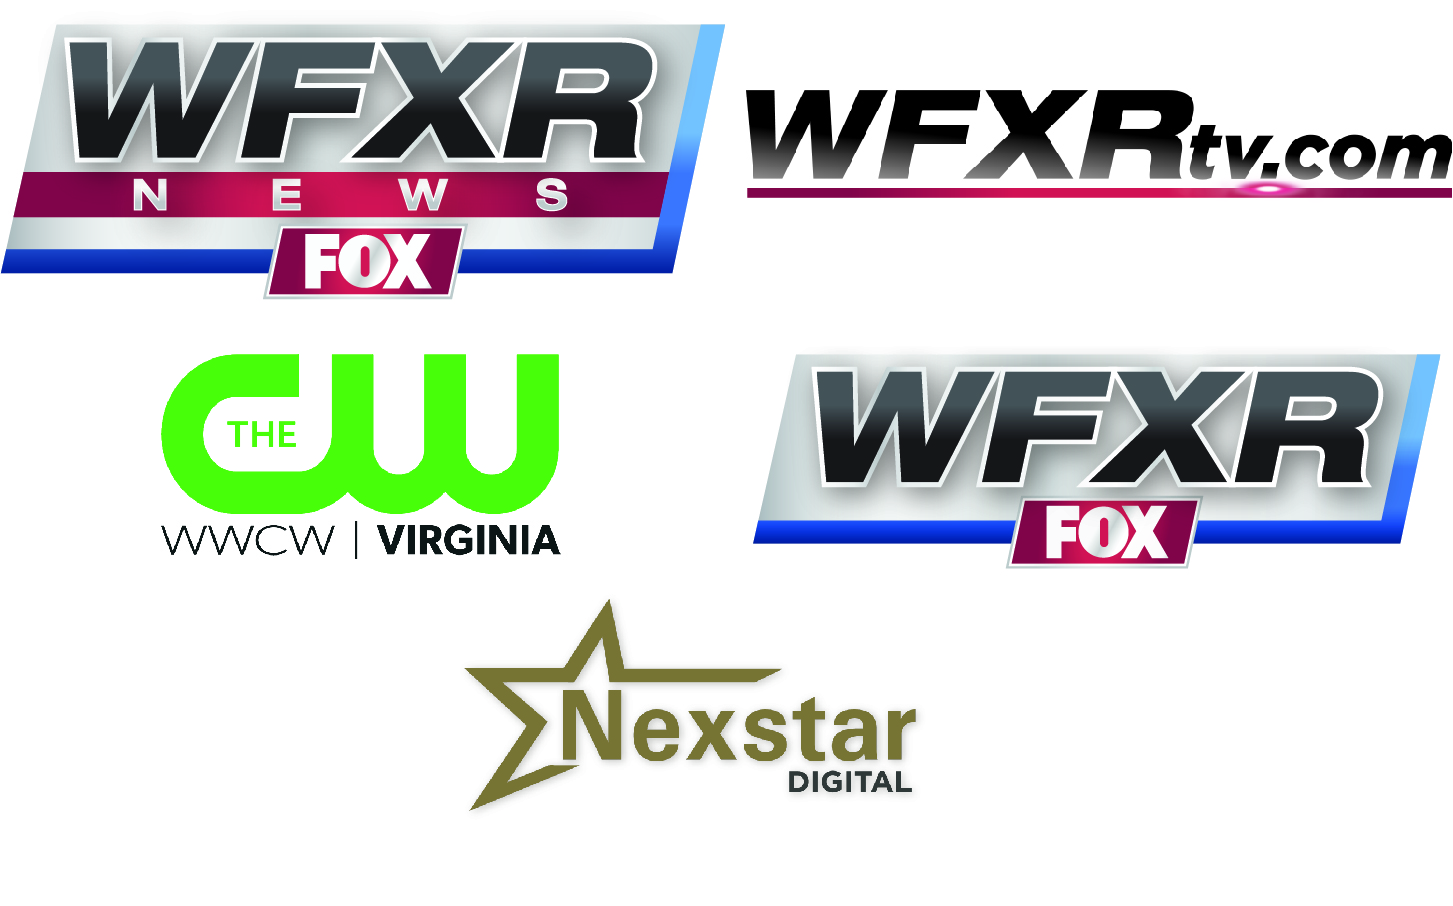 WFXR News, WFXR TV, WWCW TV and Nexstar Digital